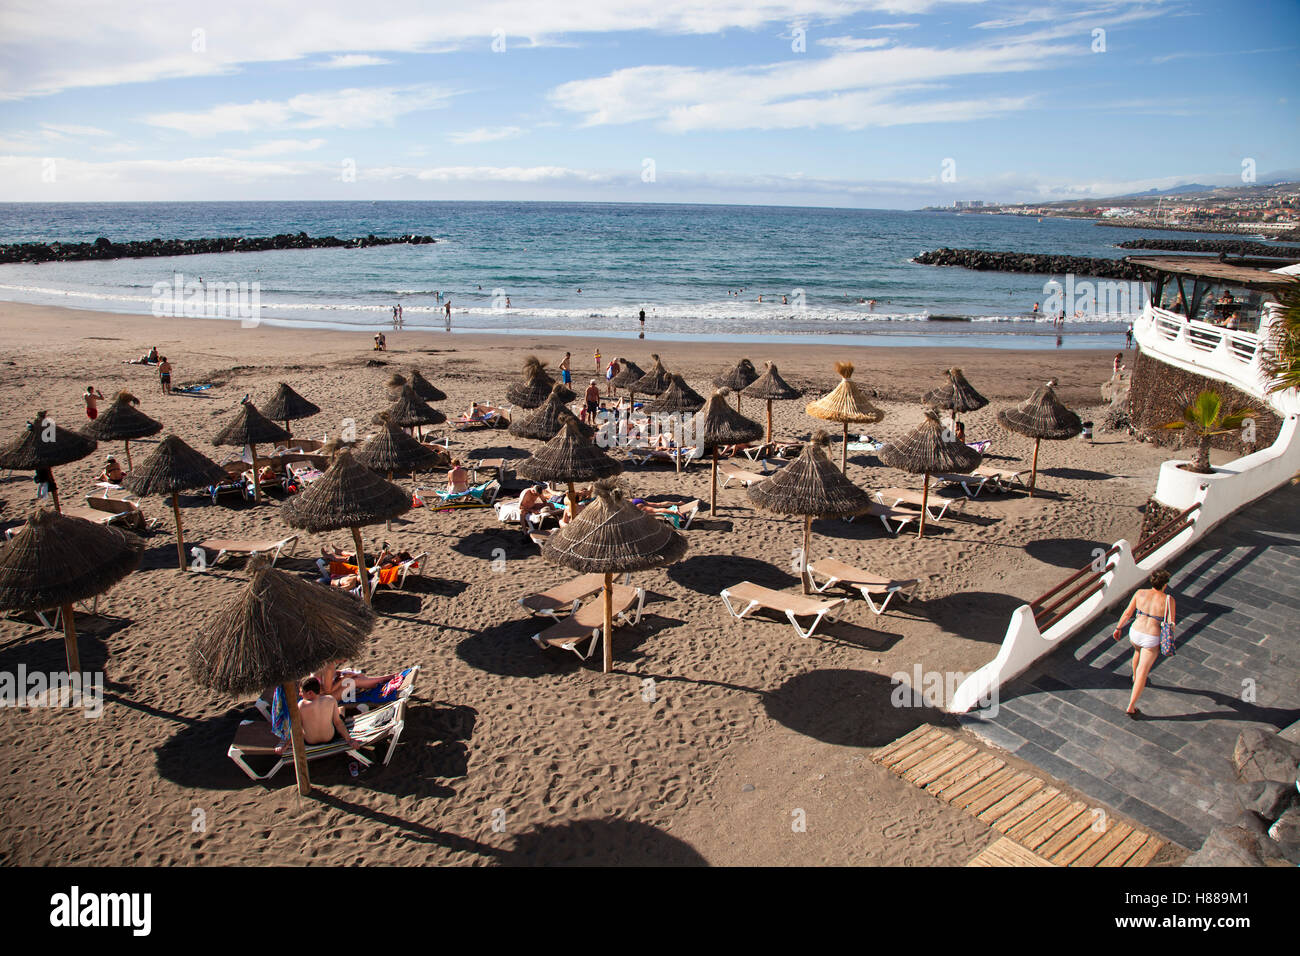 Playa de las Americas, Tenerife island, archipel des Canaries, l'Espagne, l'Europe Banque D'Images